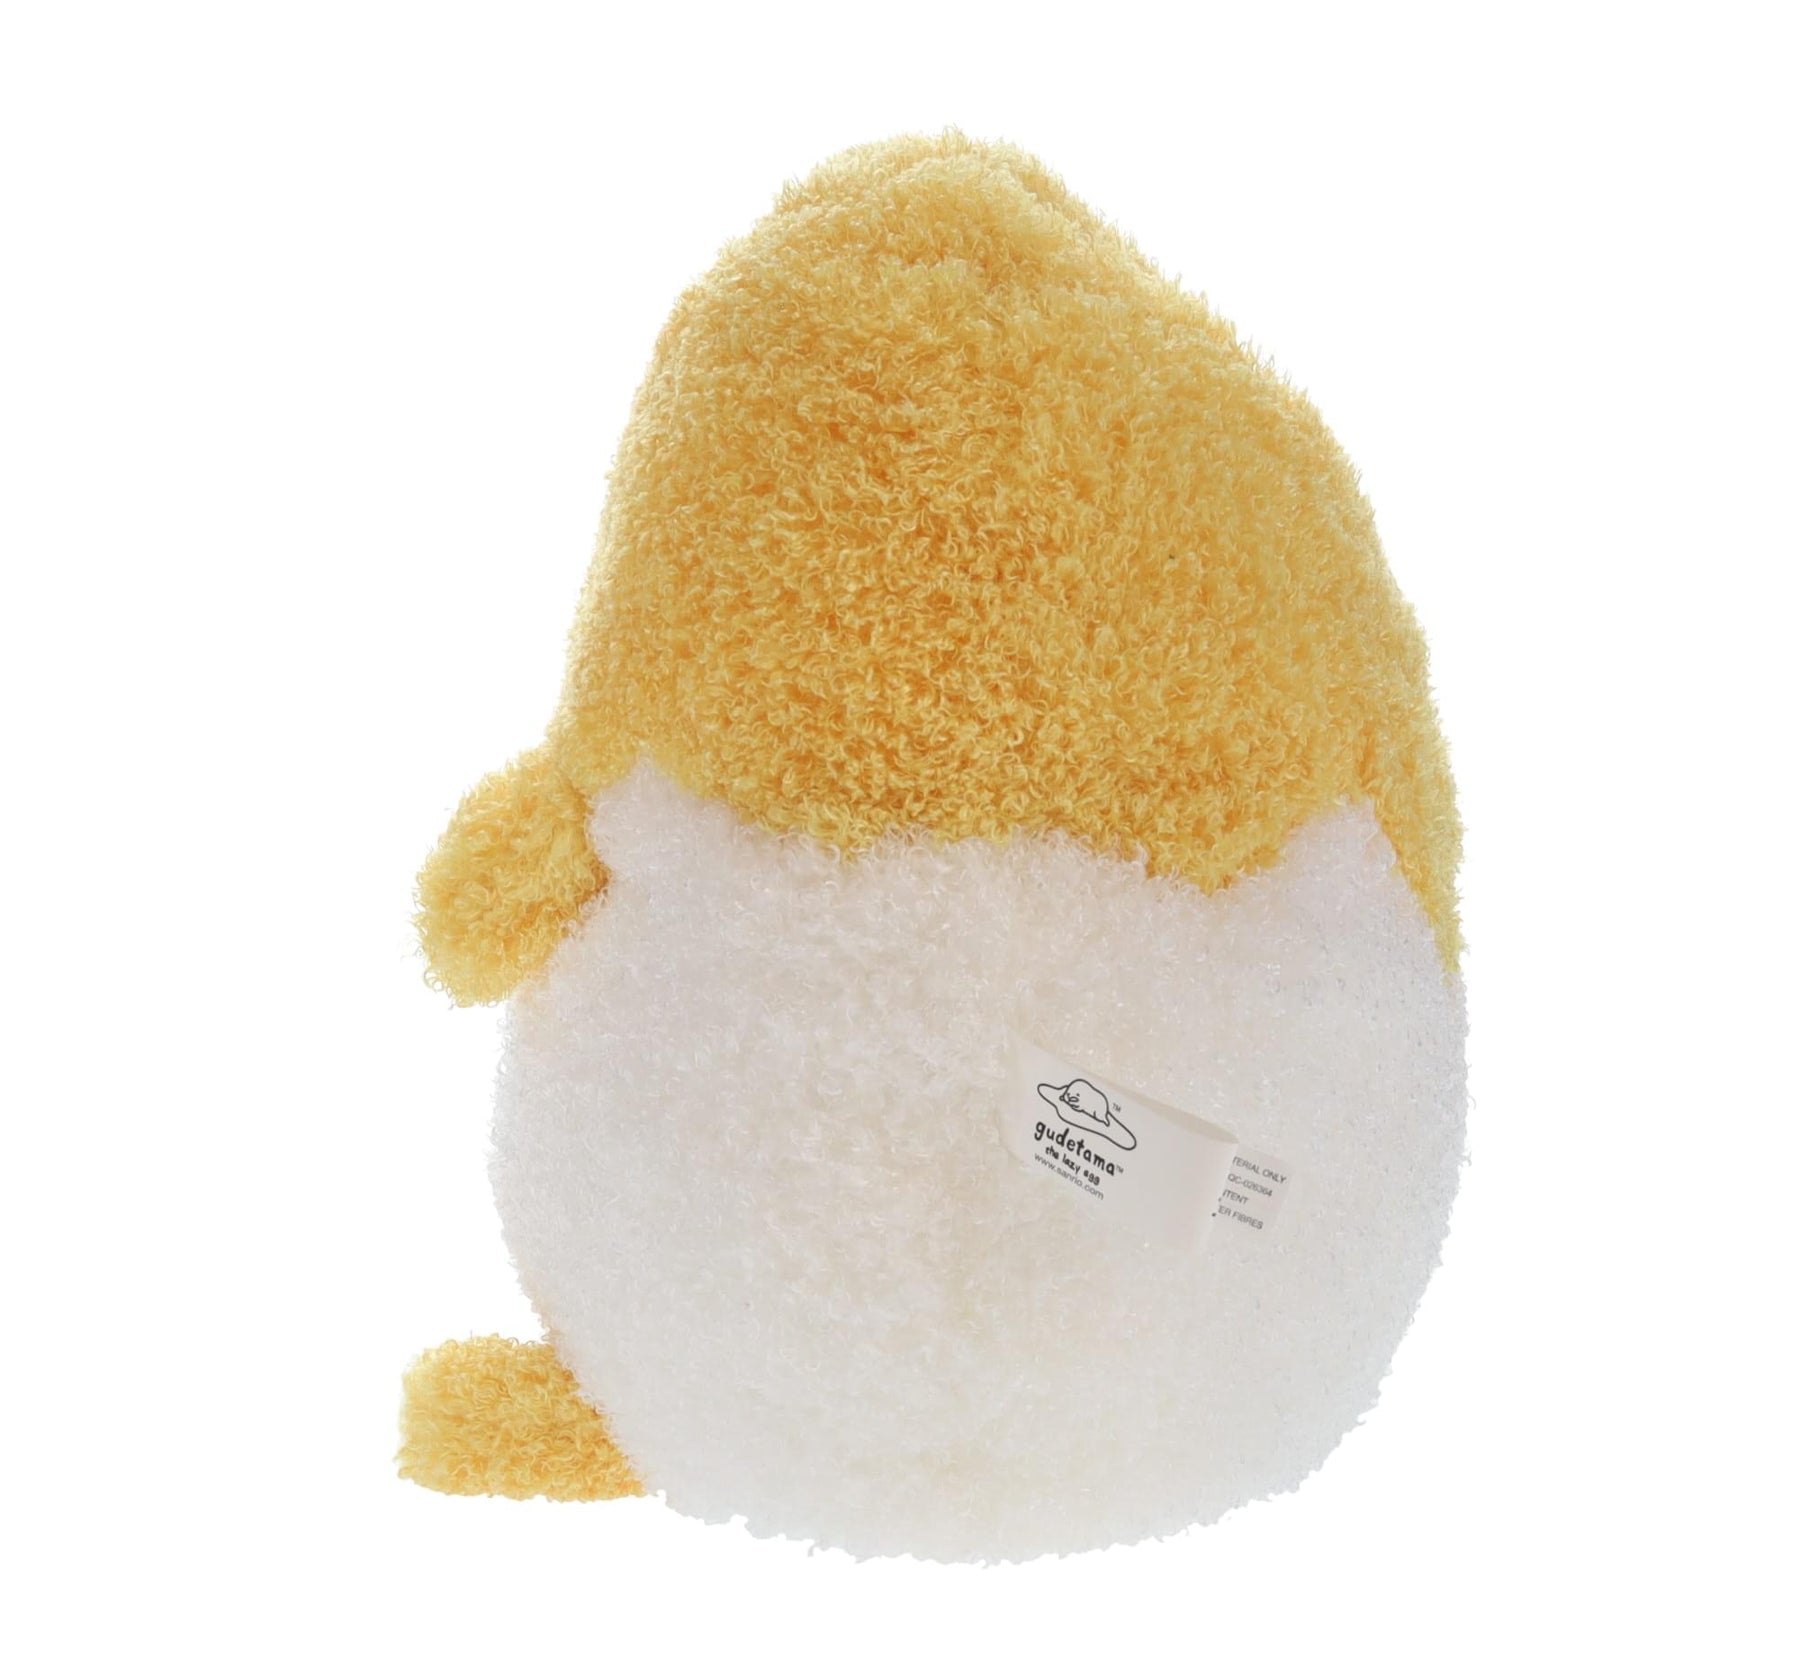 Sanrio Gudetama Egg In Shell 17 Inch Deluxe Plush